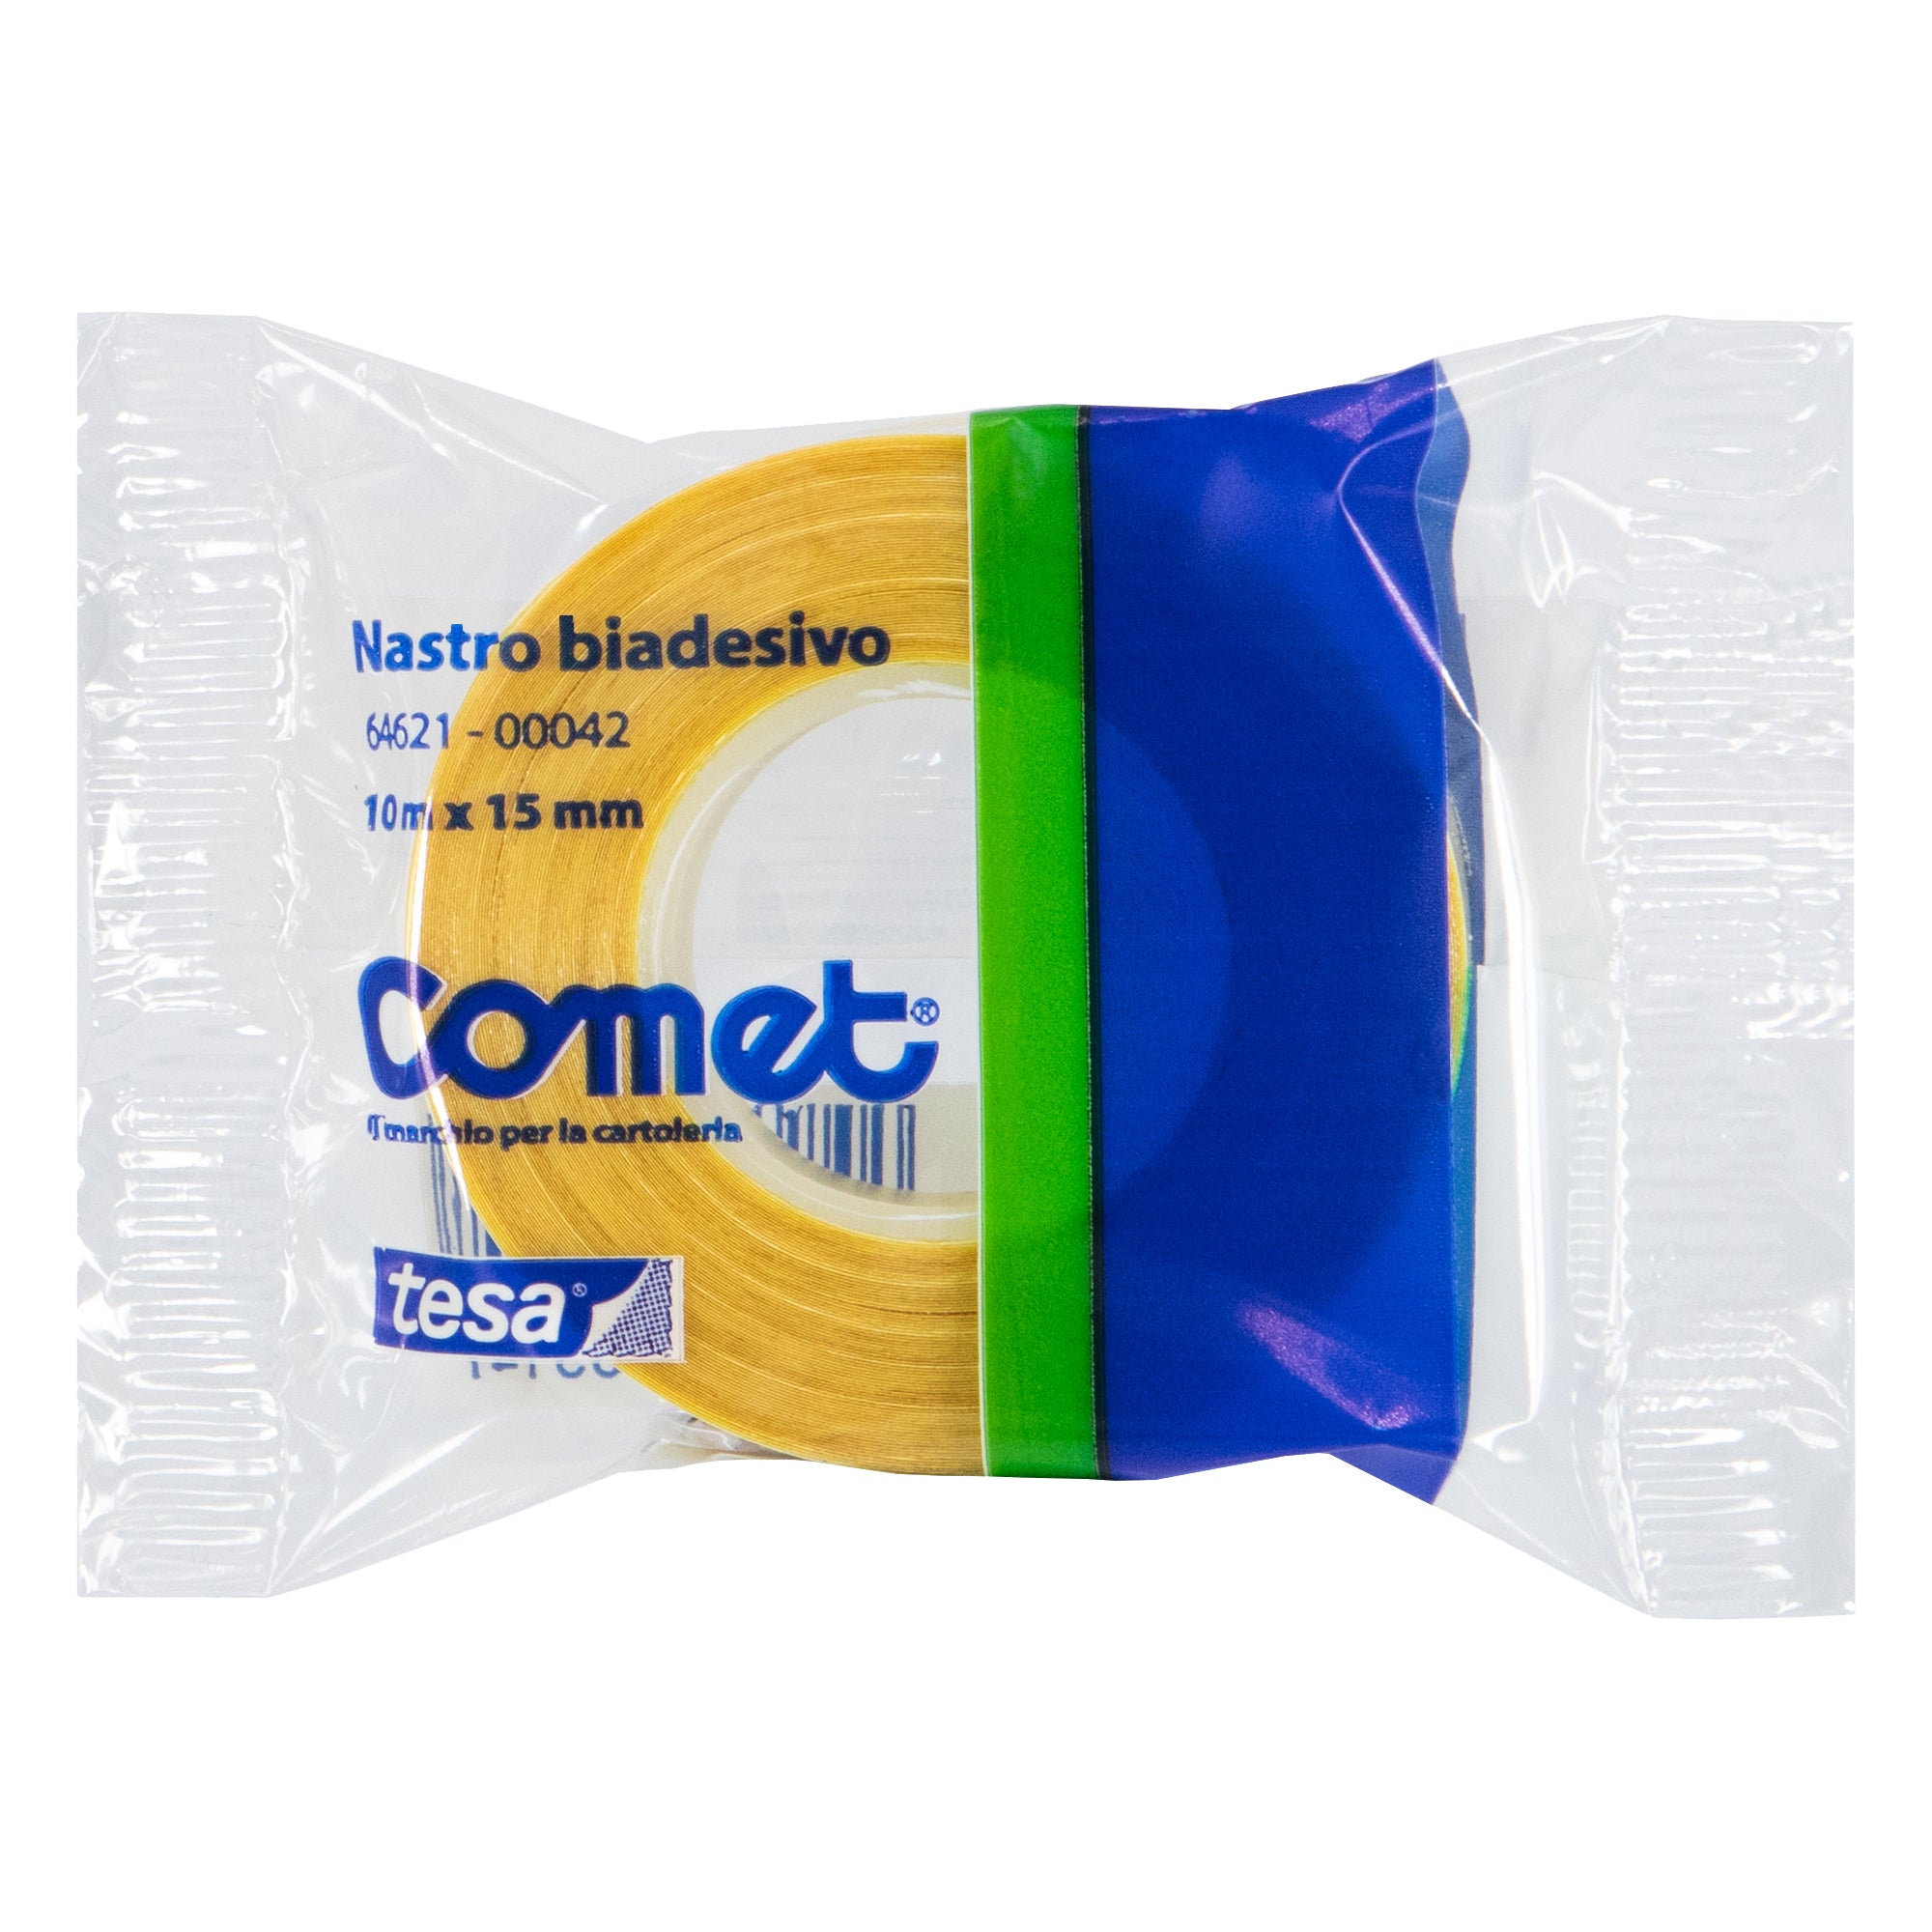 comet-nastro-biadesivo-10mtx15mm-trasparente-64-621